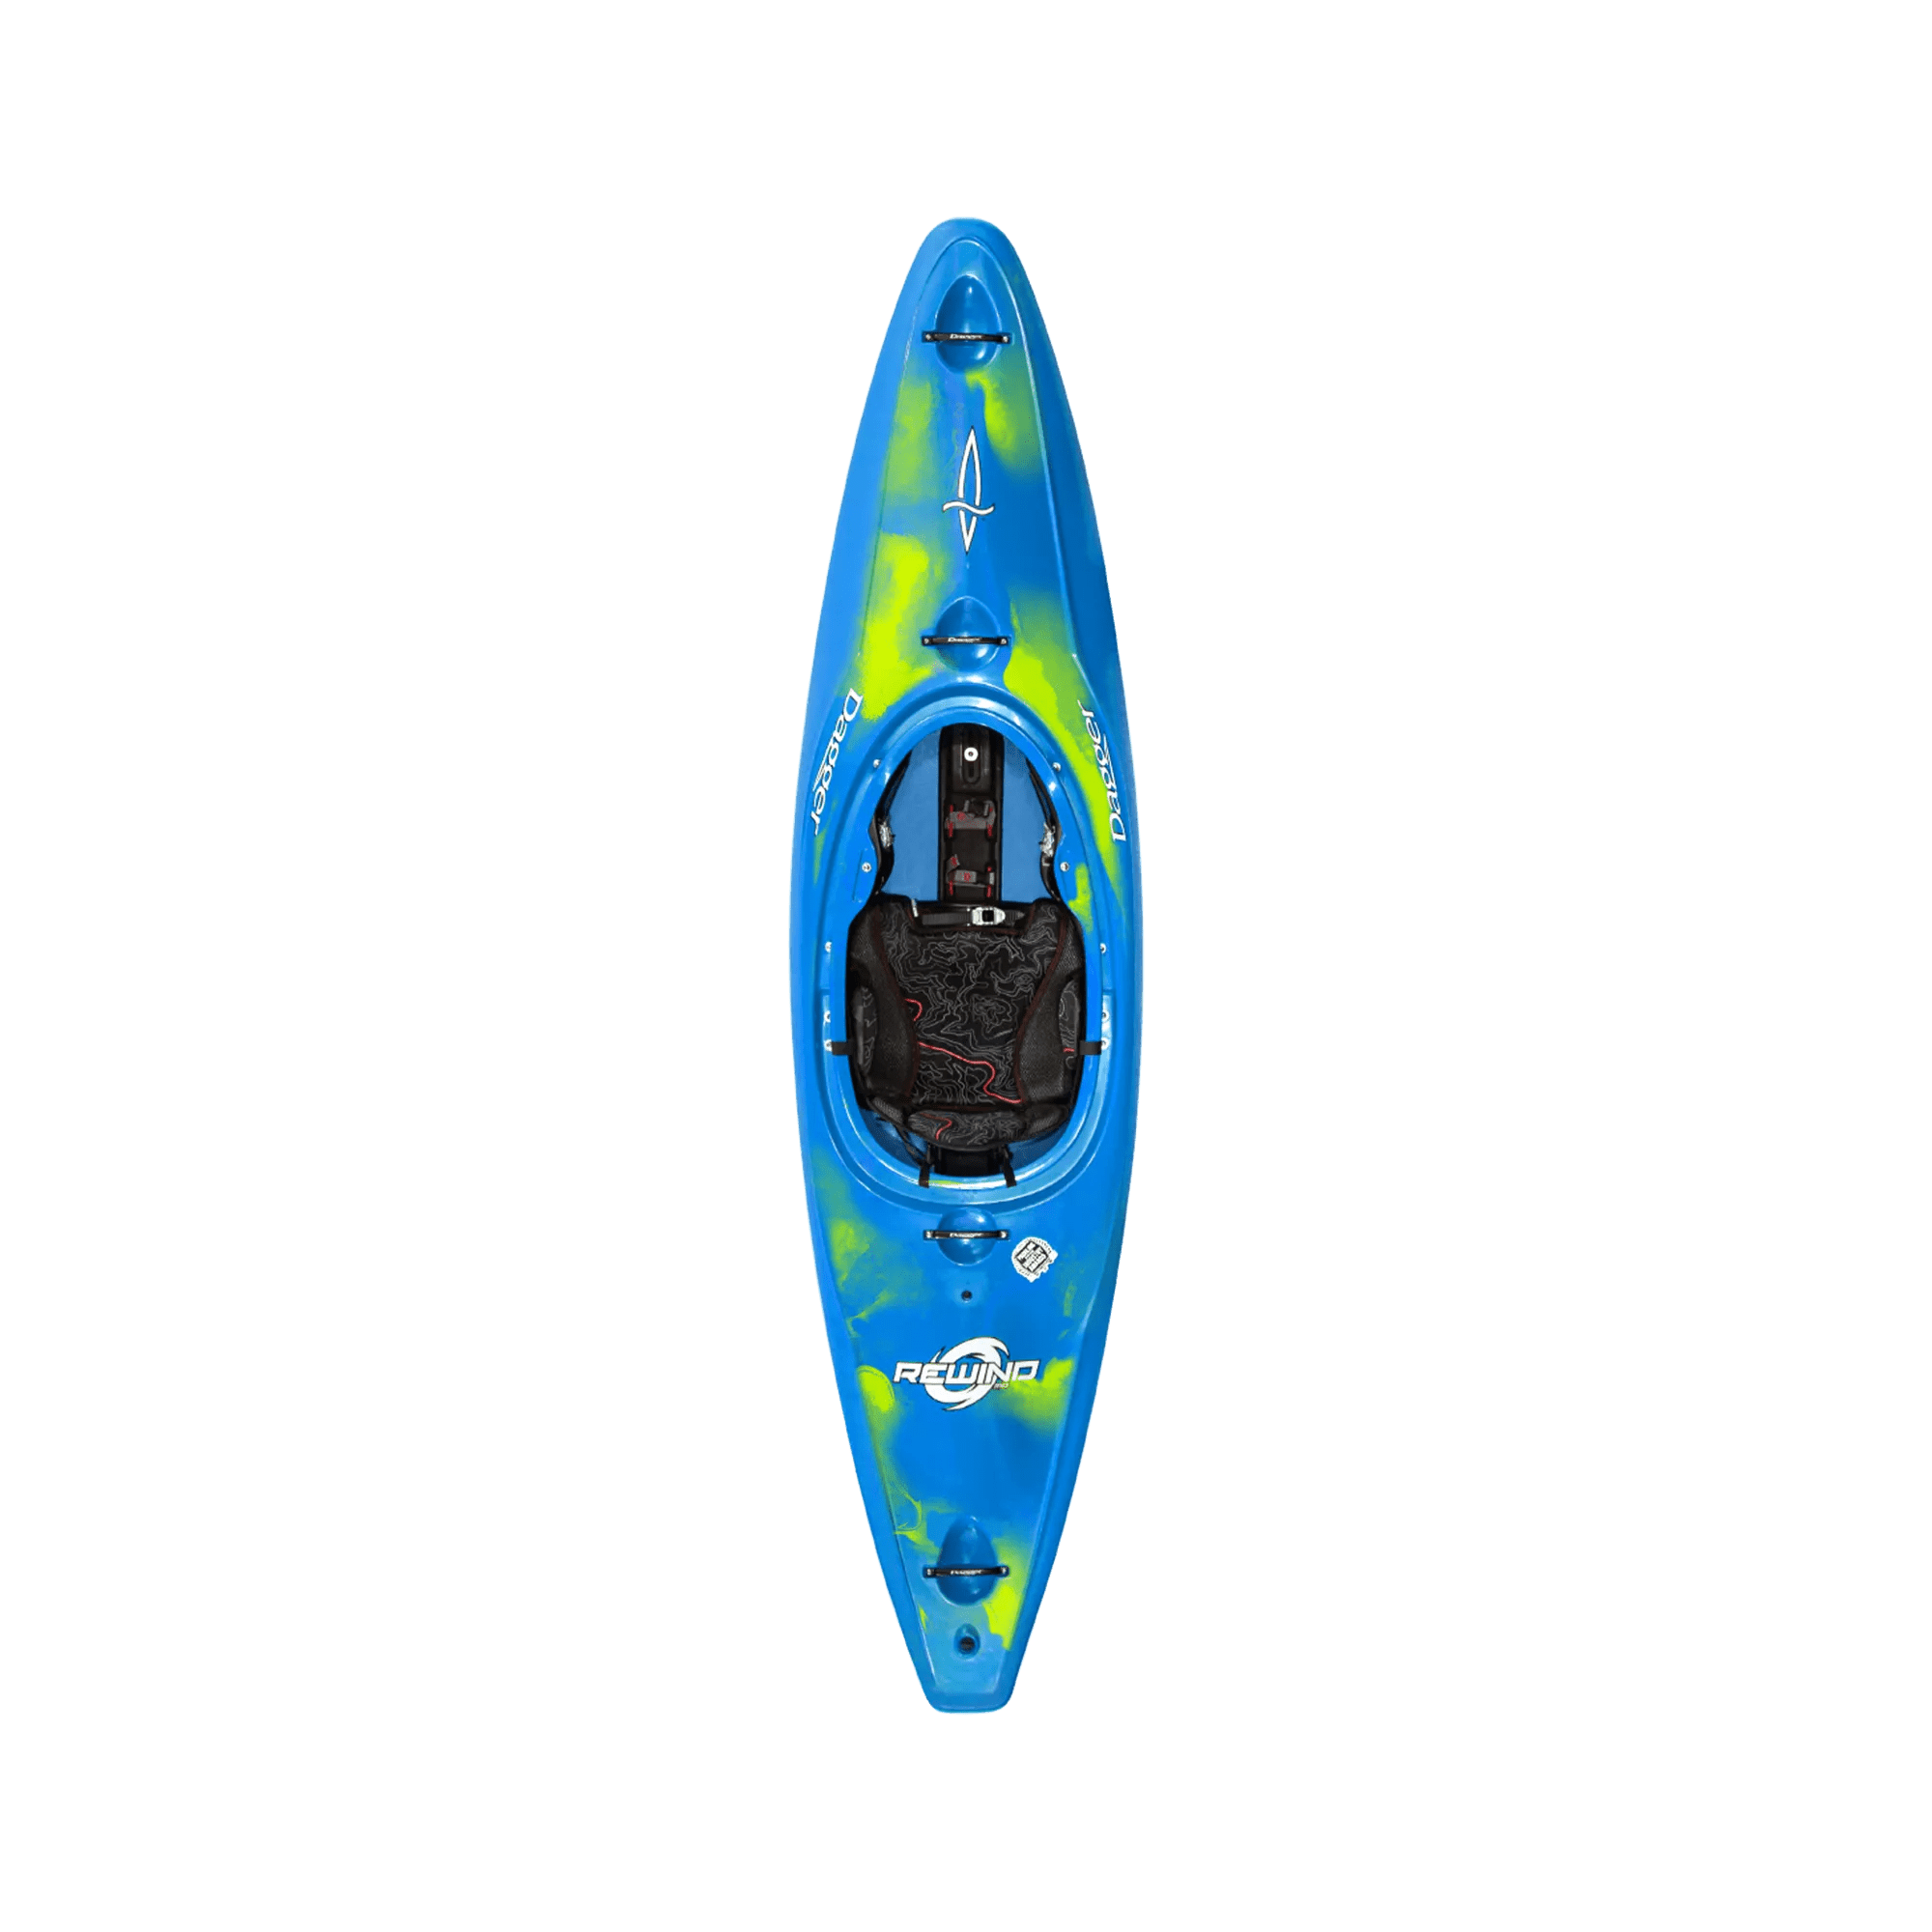 DAGGER - Rewind SM River Play Whitewater Kayak - Blue - 9010470197 - TOP 